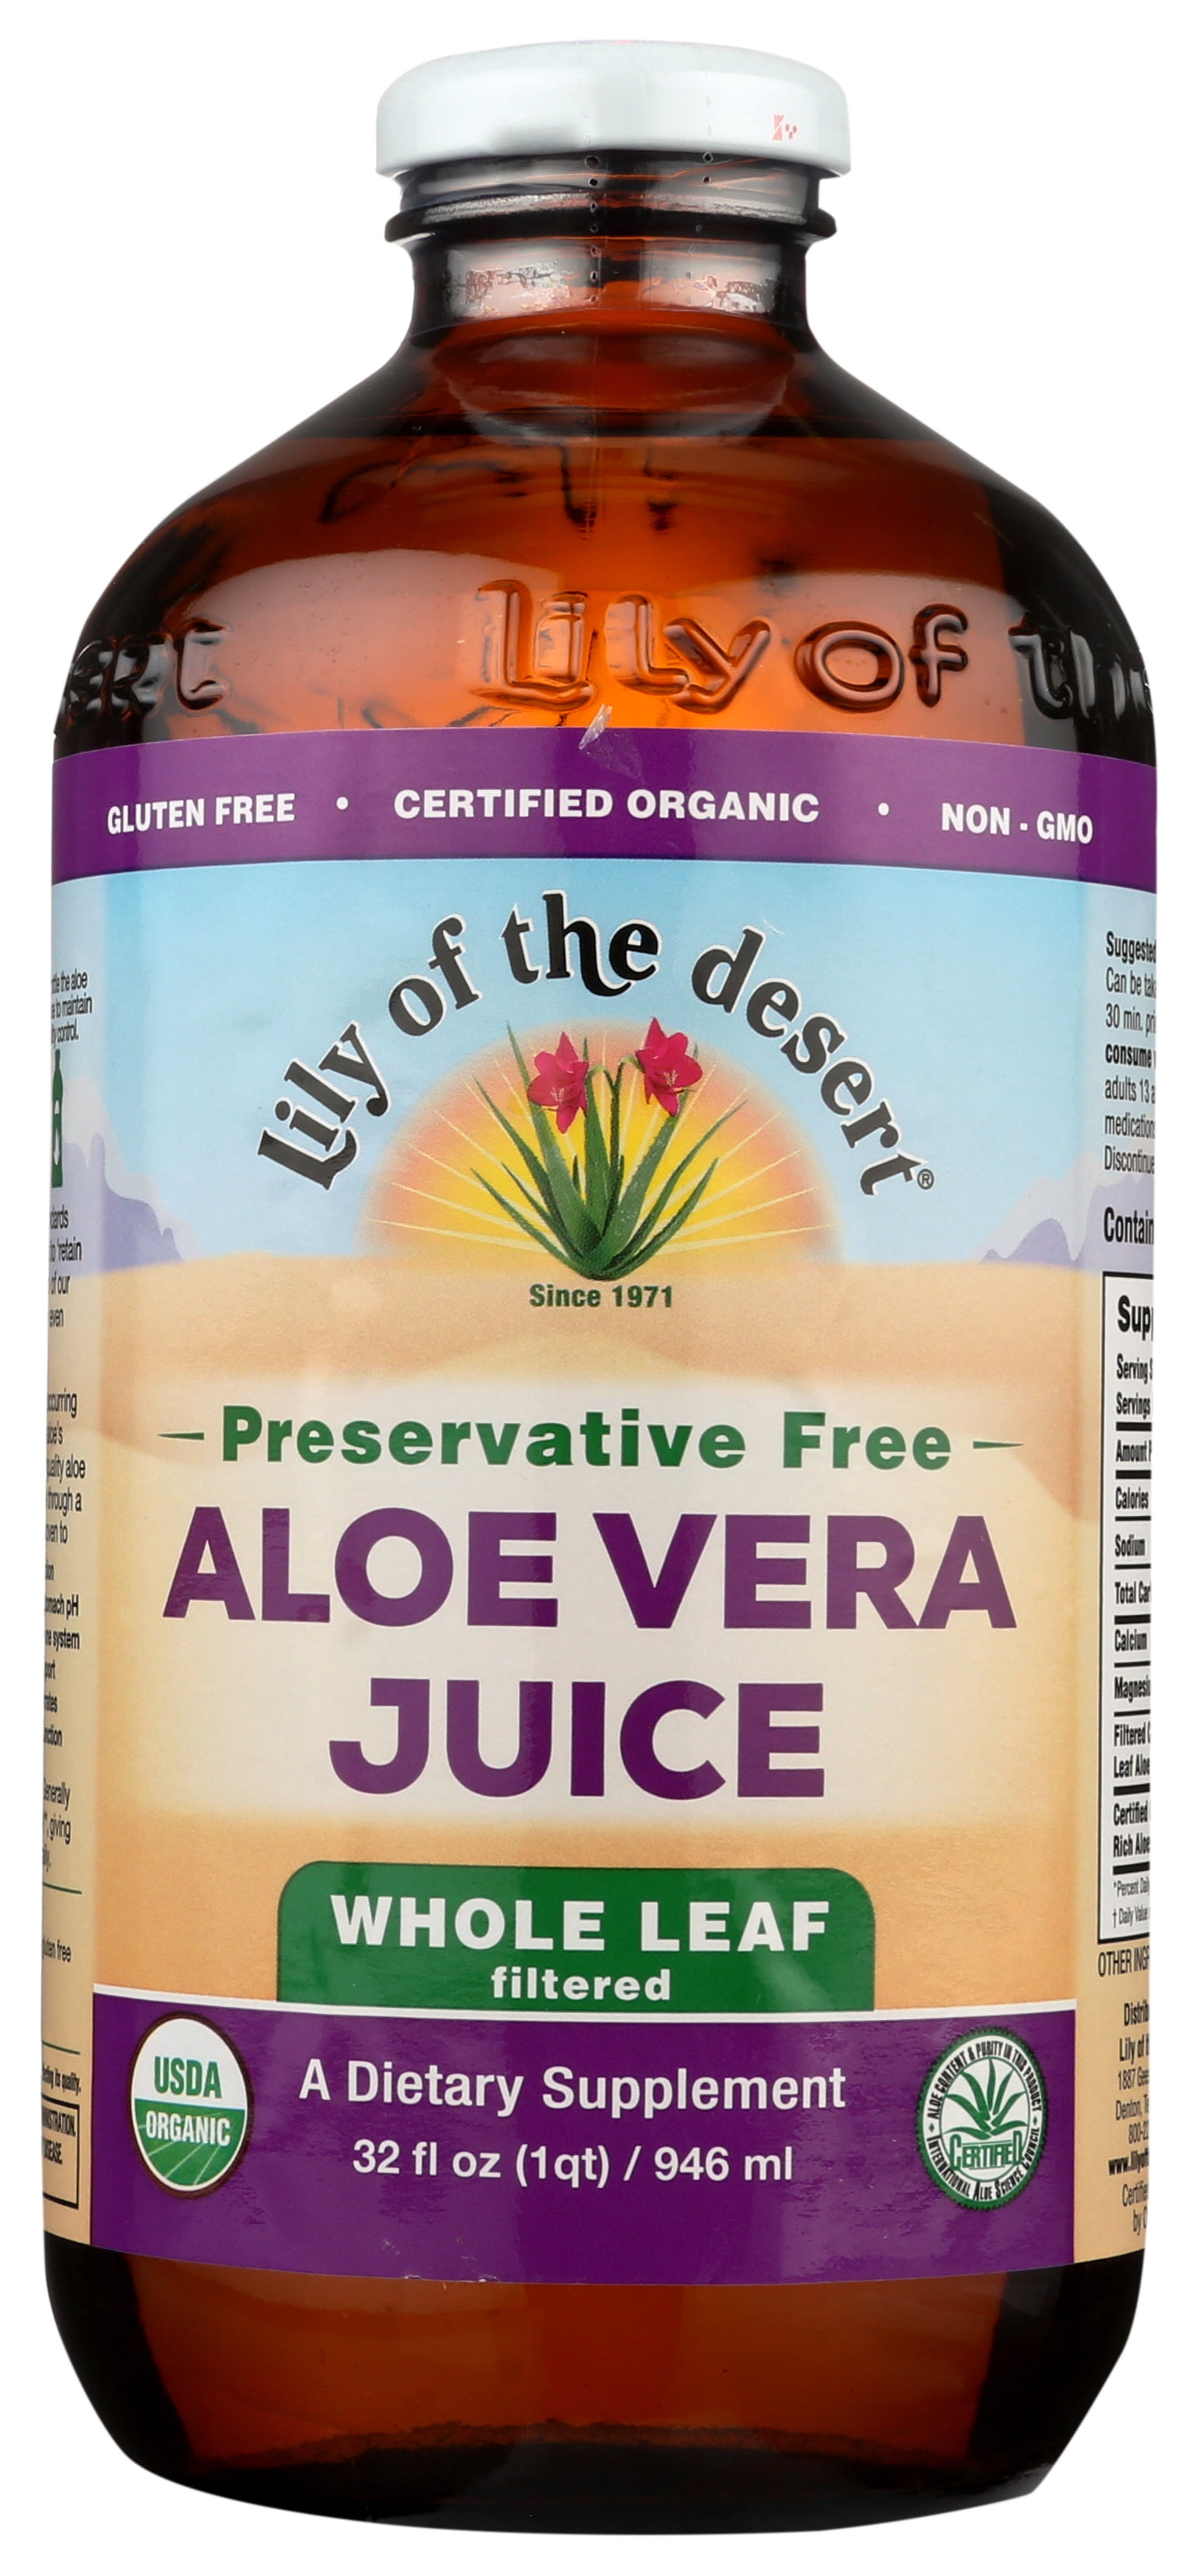 eeuwig spoor bad Lily of the desert brand preservative free USDA certified organic whole  leaf aloe vera juice dietary supplement - Walmart.com